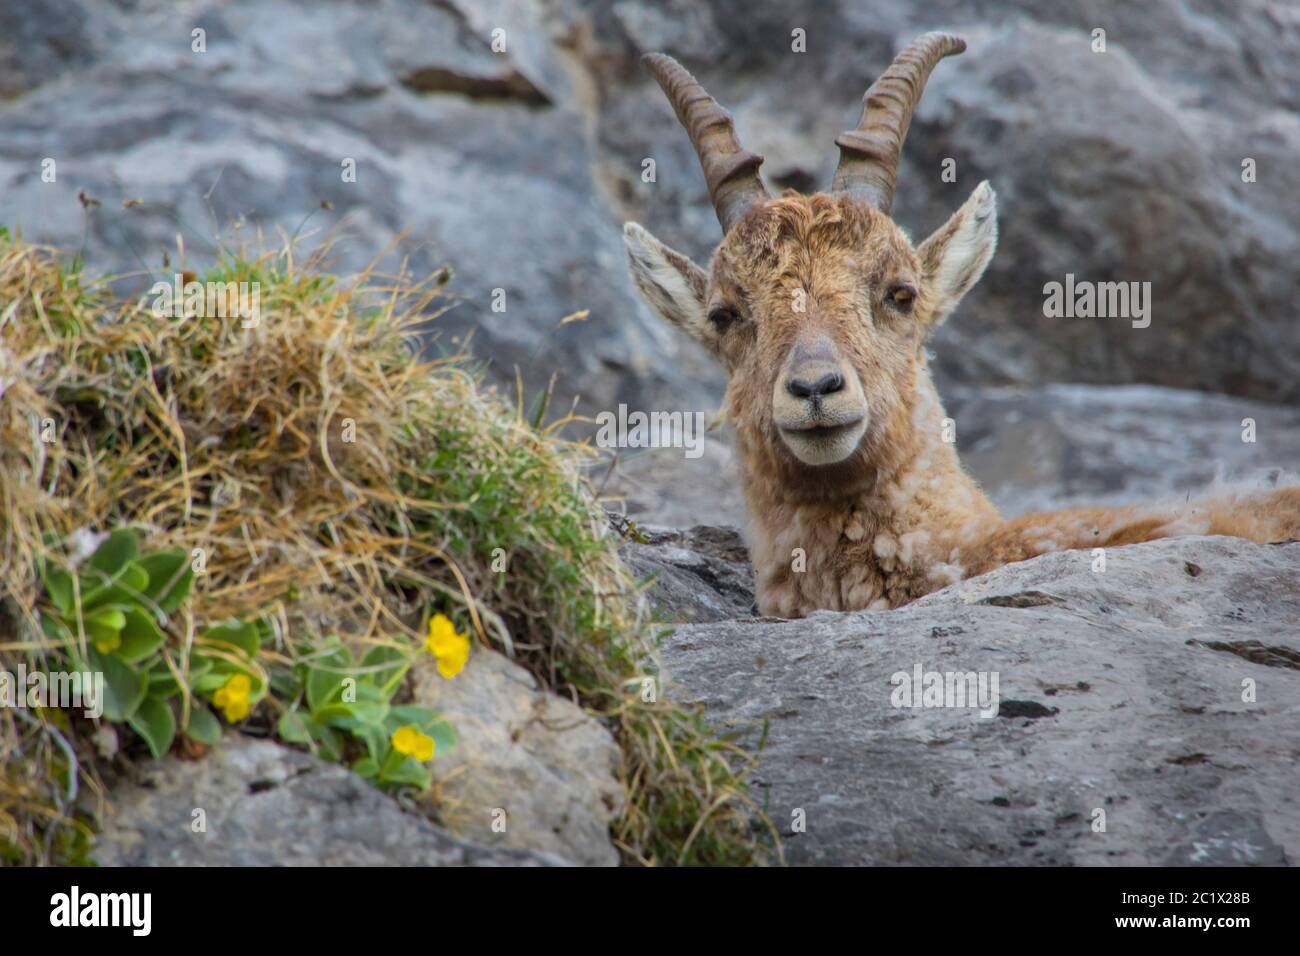 Ibex alpin (Capra ibex, Capra ibex ibex), jeune homme ibex alpin debout dans un mur de roche abrupte avec des glissements de terrain en fleur, Suisse, Toggenburg, Chaeserrugg Banque D'Images